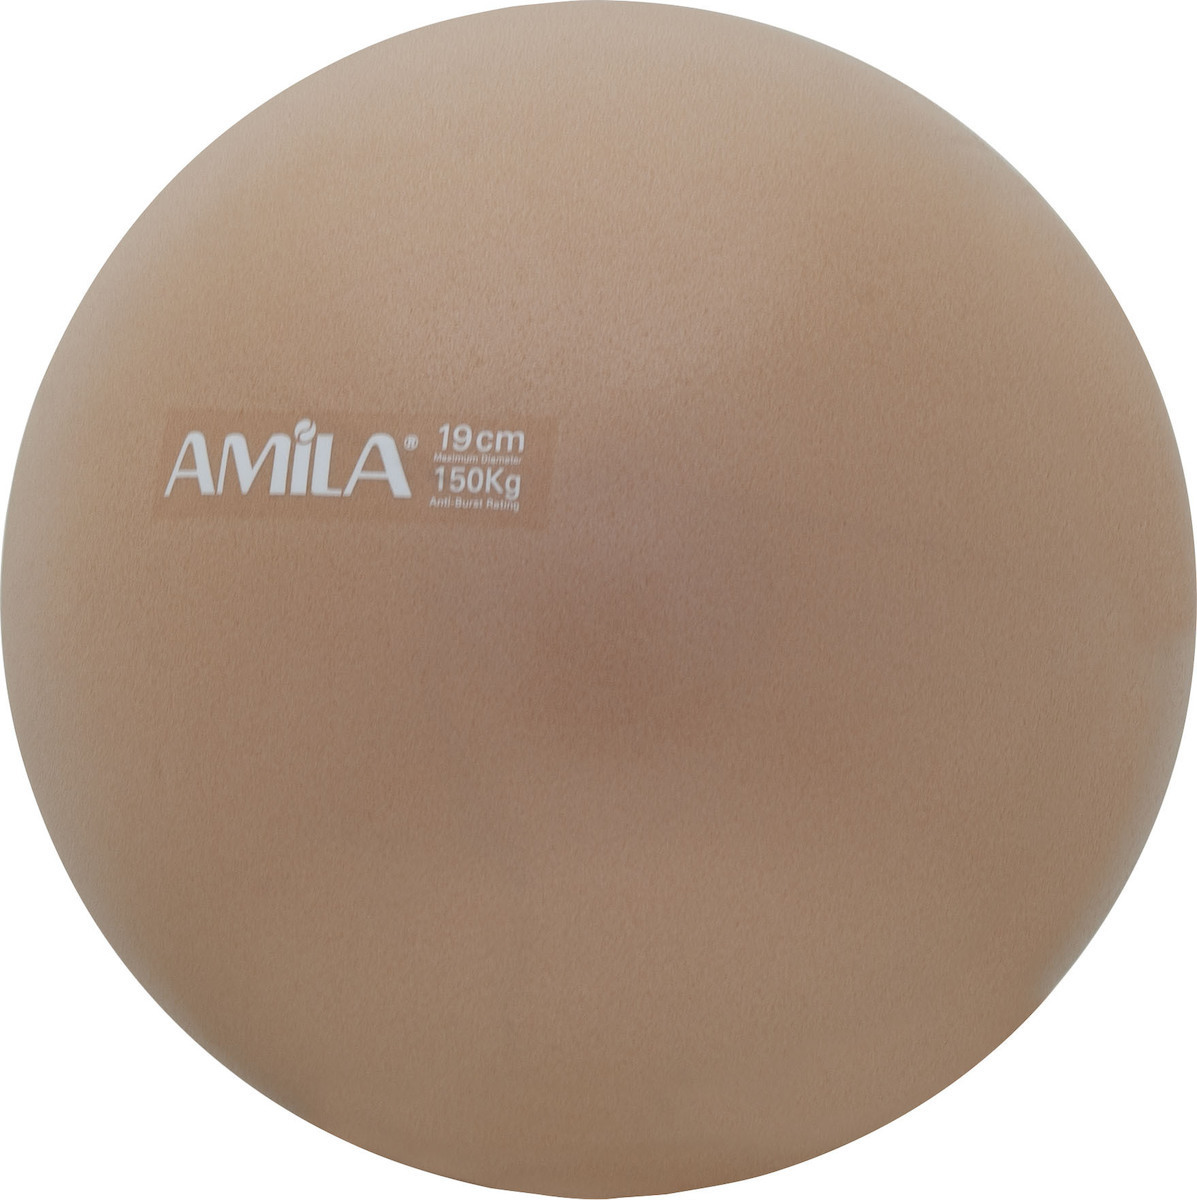 AMILLA Μπάλα Pilates 19cm (95804)